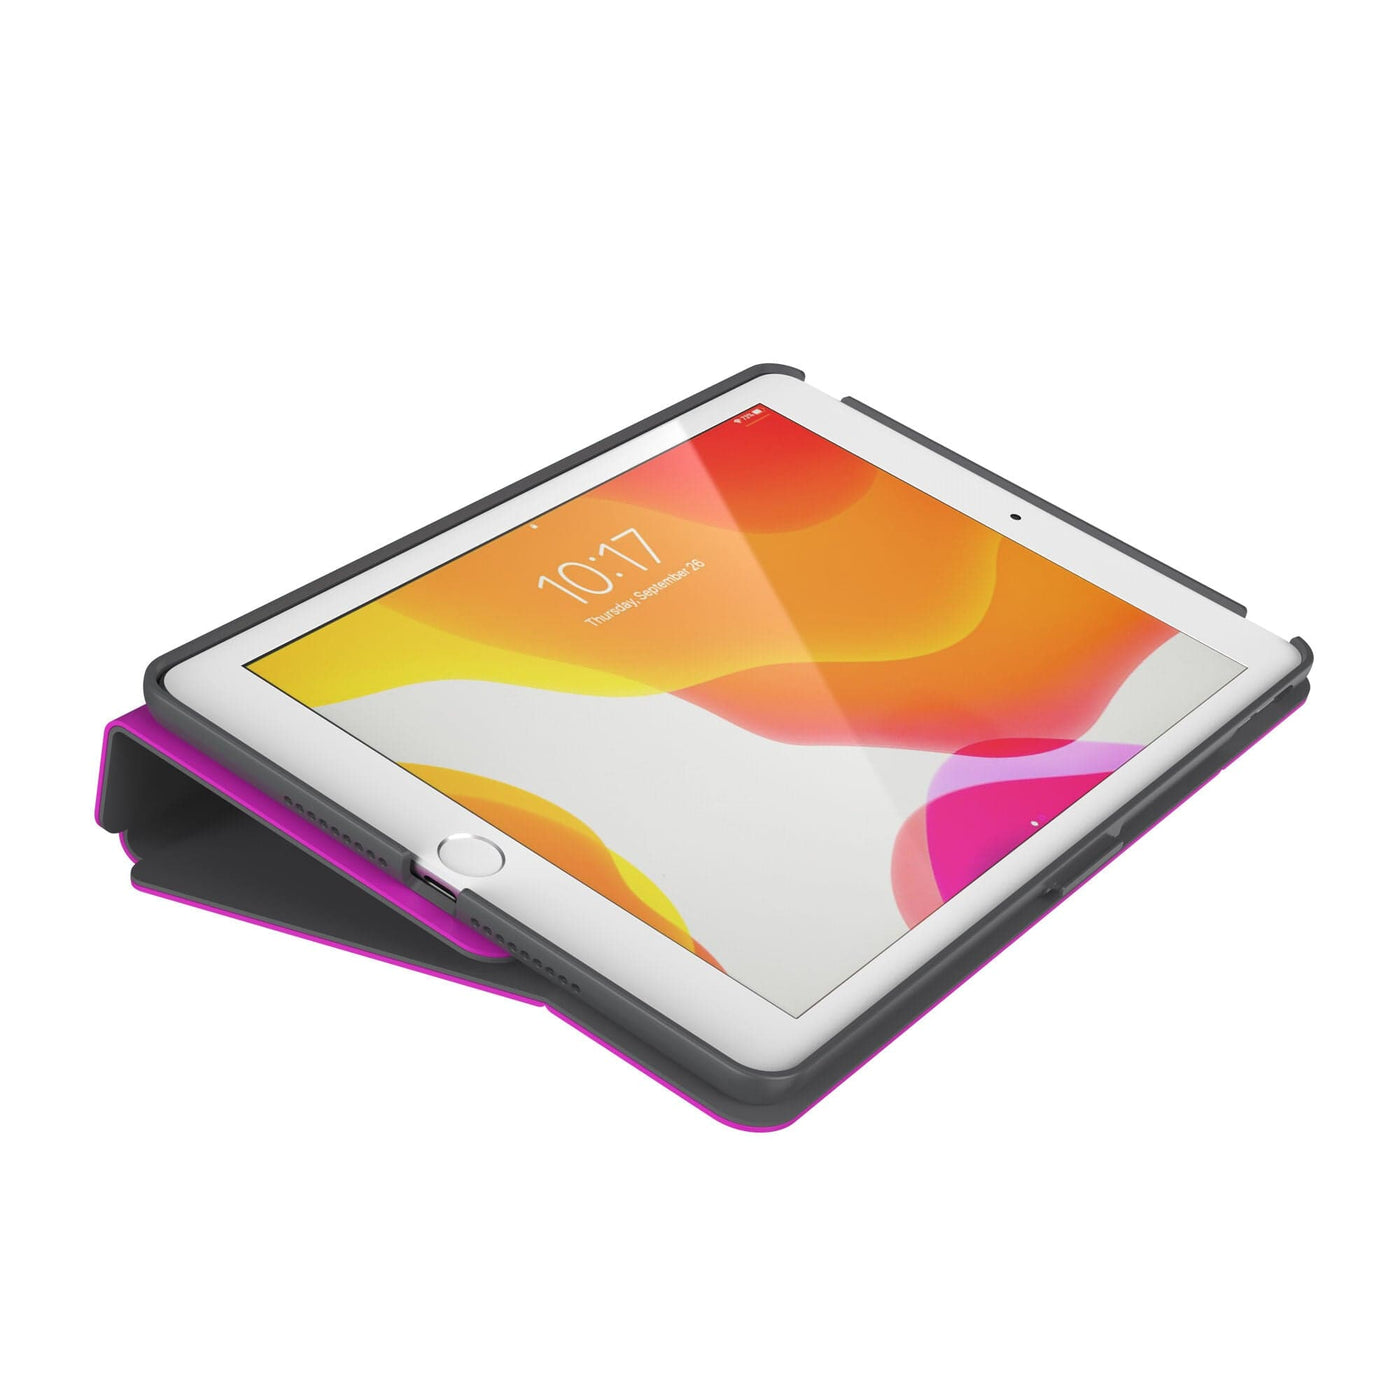 Speck Case-E Run 10.2-inch iPad Cases Best 10.2-inch iPad - $39.99